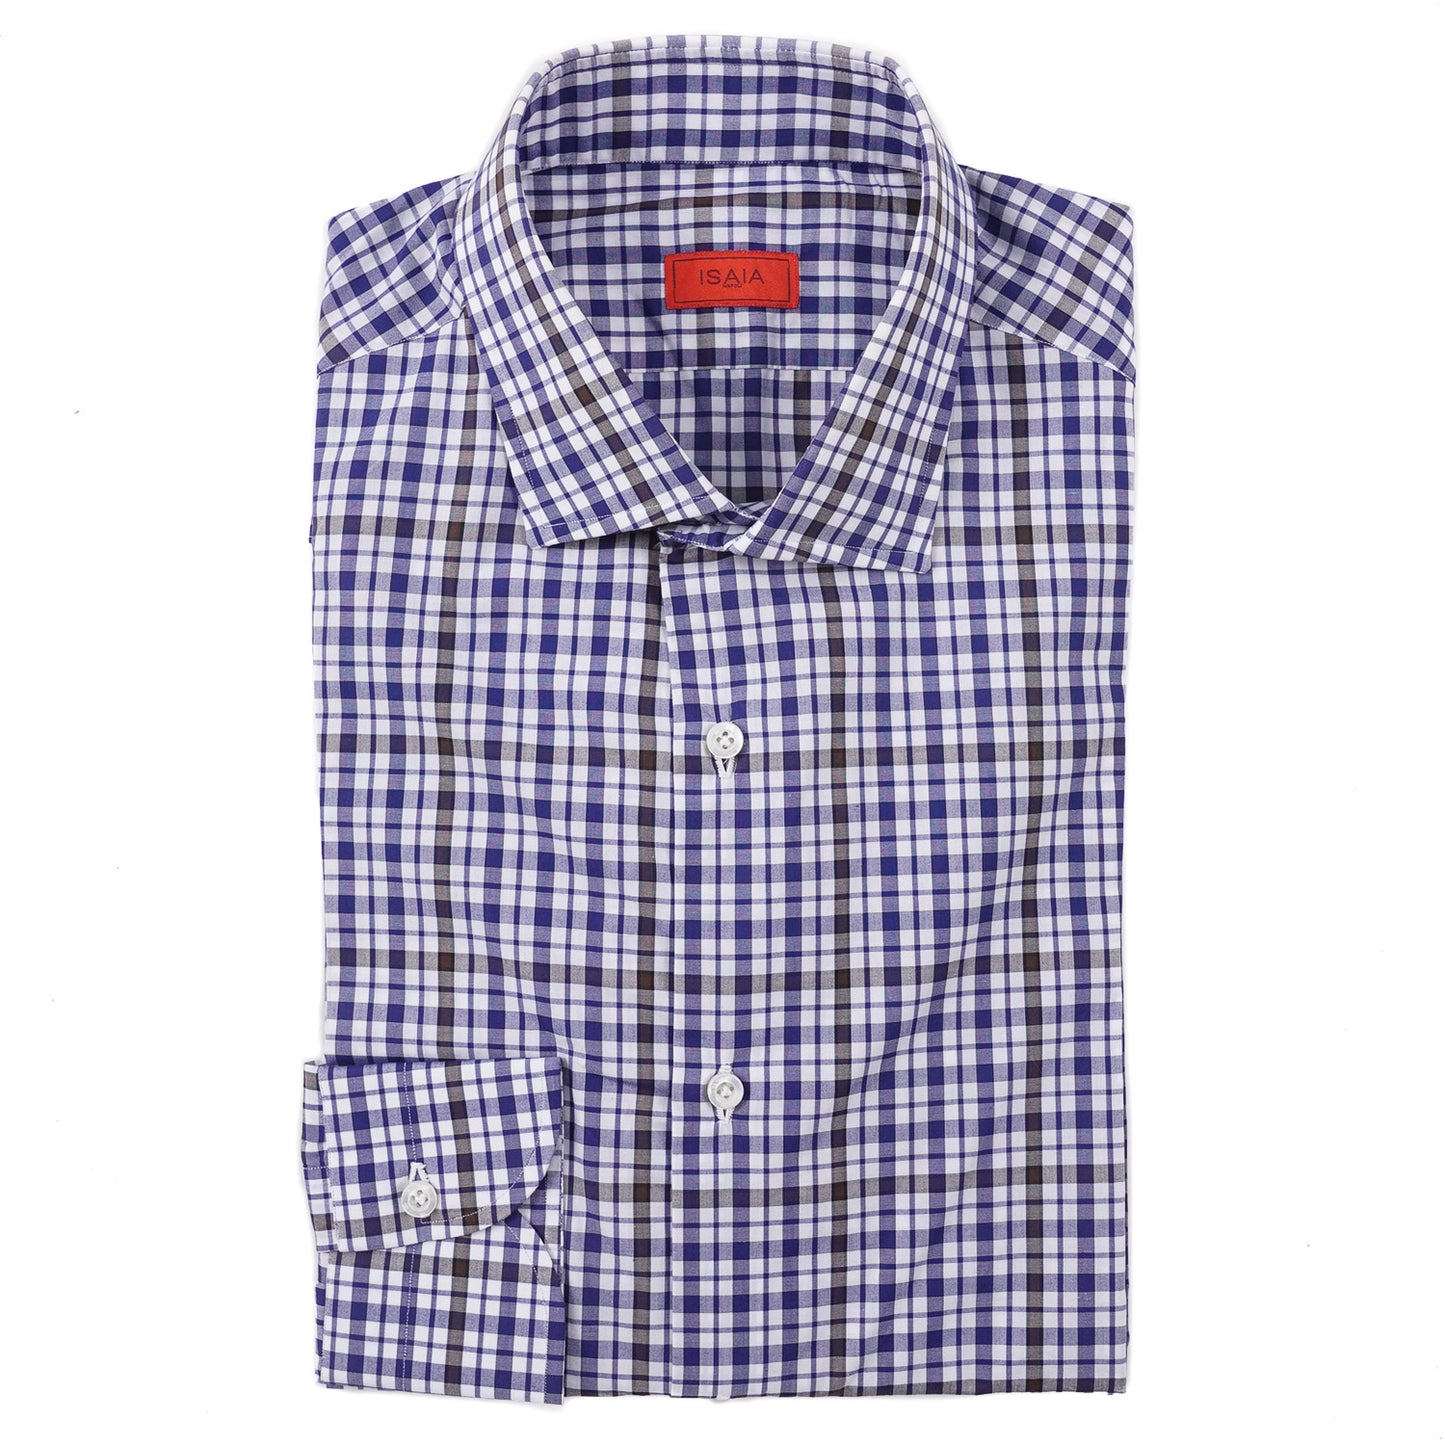 Isaia Slim-Fit Layered Check Cotton Dress Shirt - Top Shelf Apparel